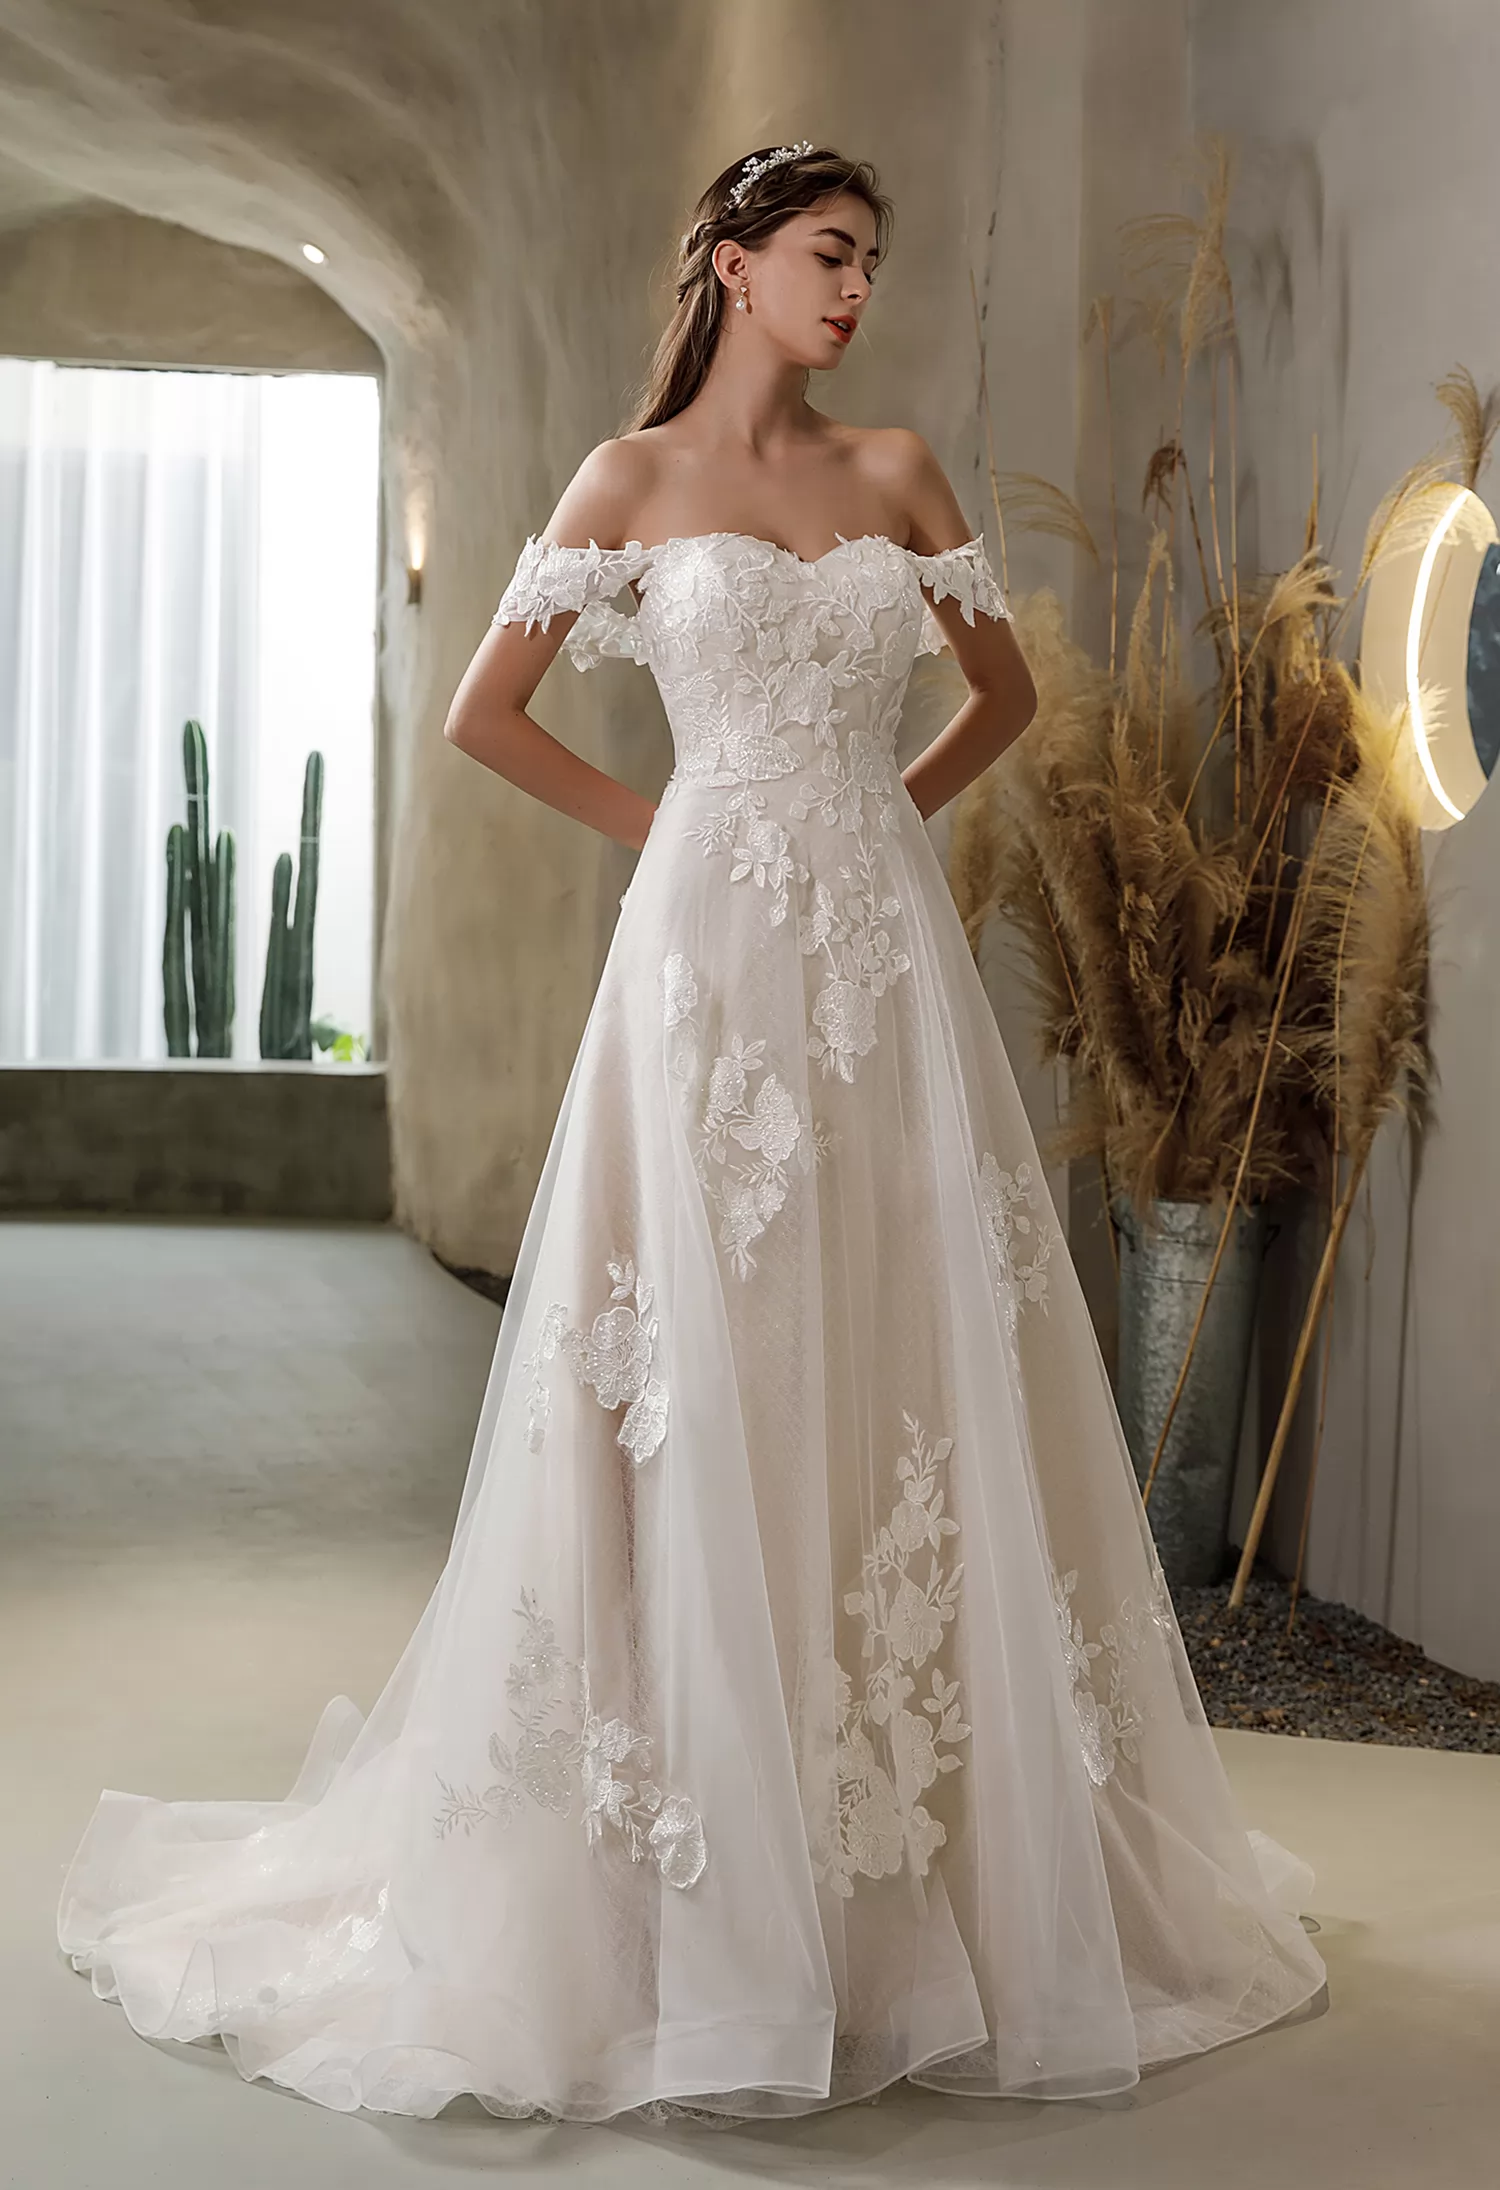 Floral Lace Wedding Dress With Detachable Off-the-Shoulder Straps